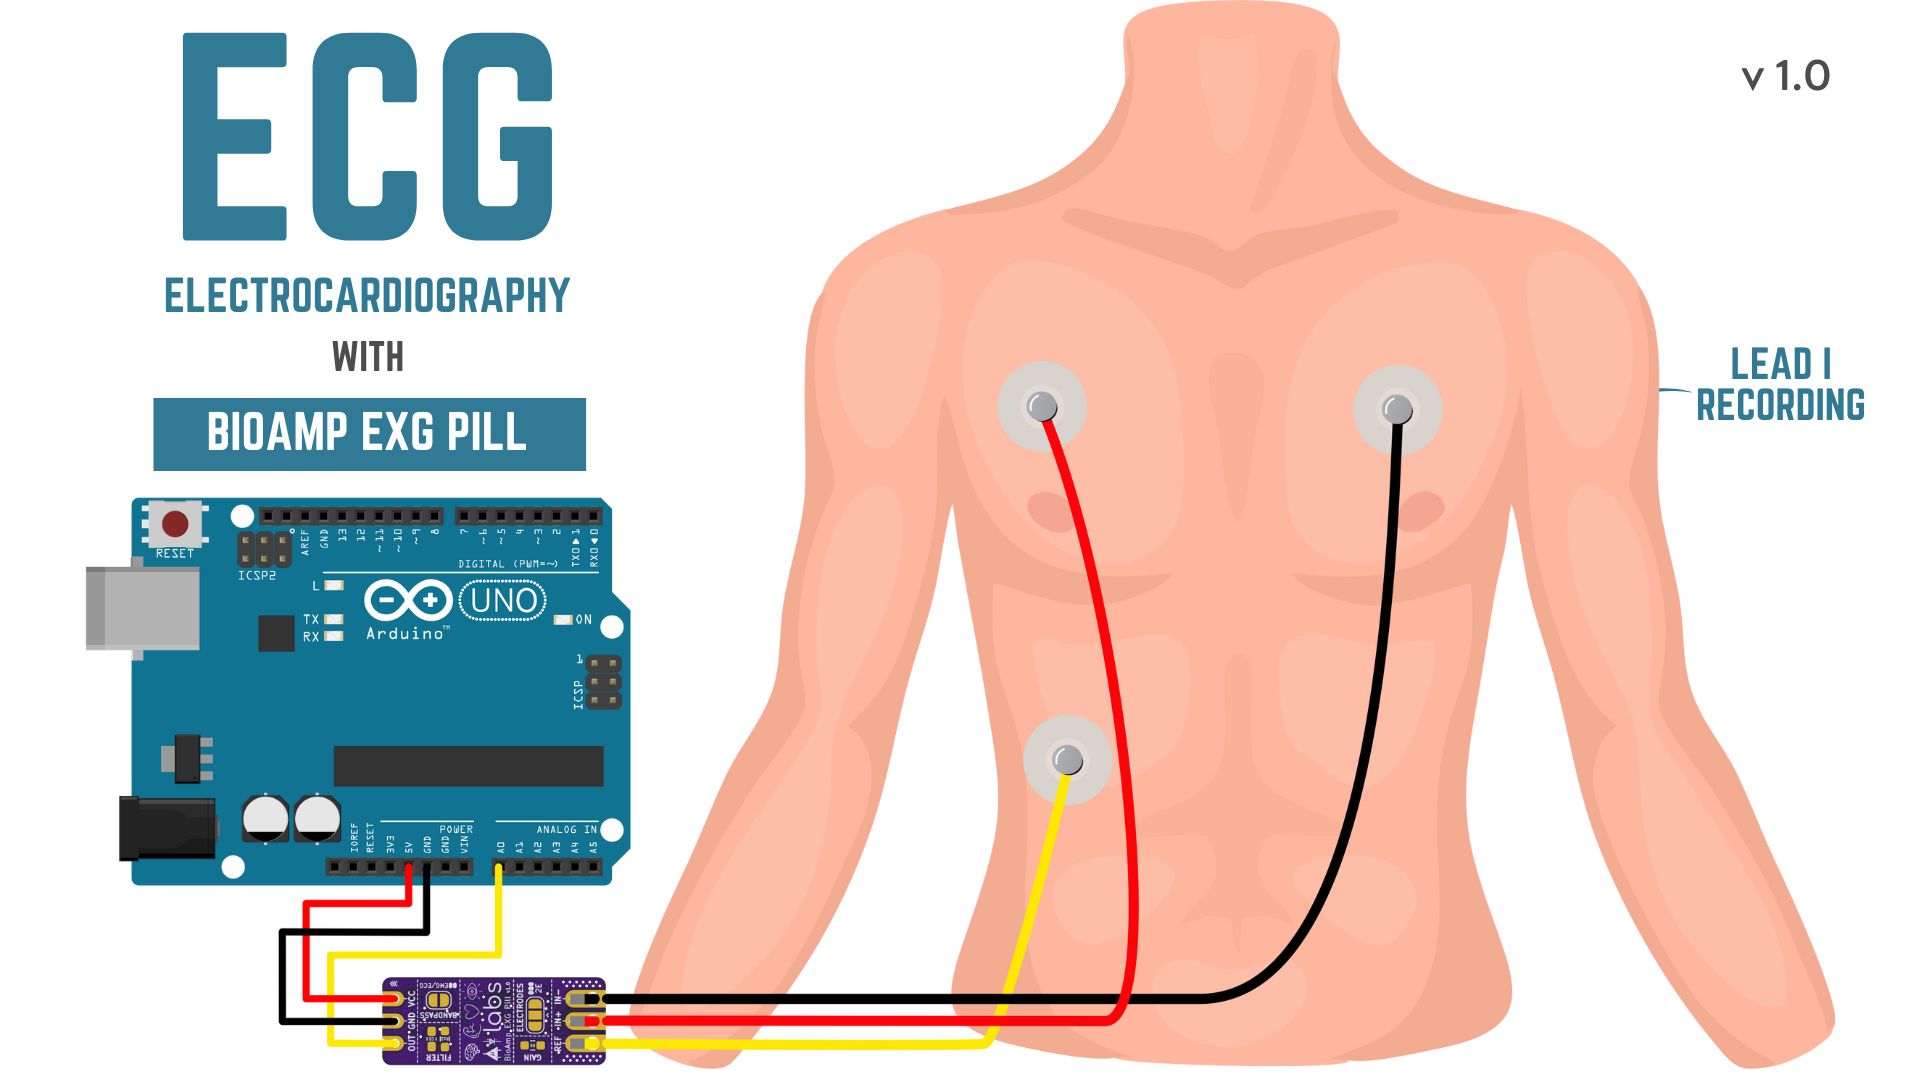 BioAmp EXG Pill - Electrocardiography (ECG) Lead 1